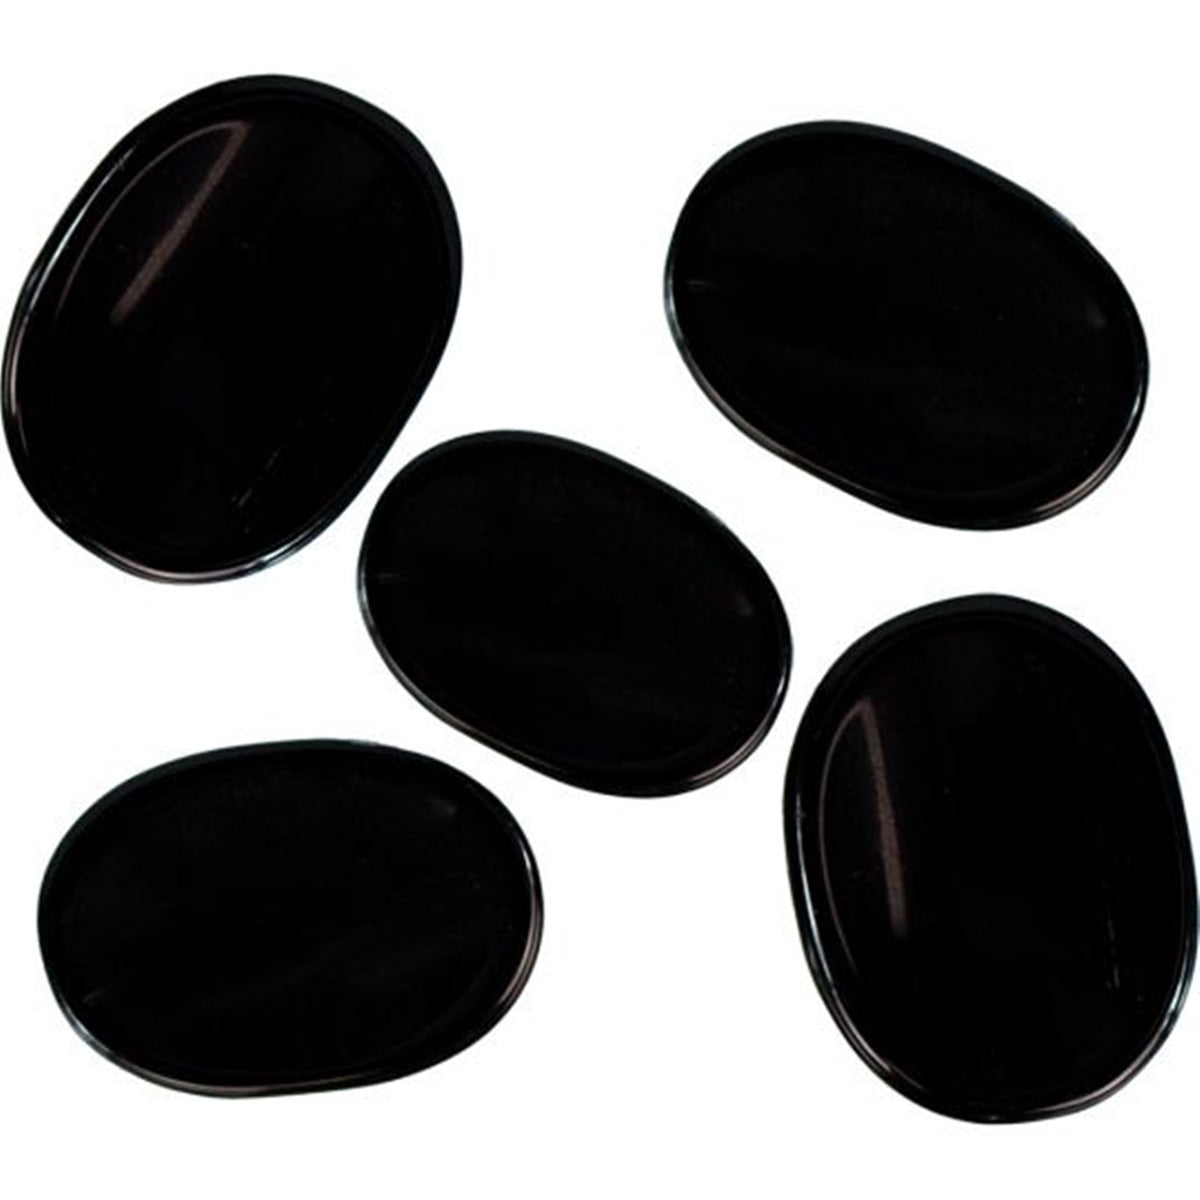 Black Agate Worry Stone